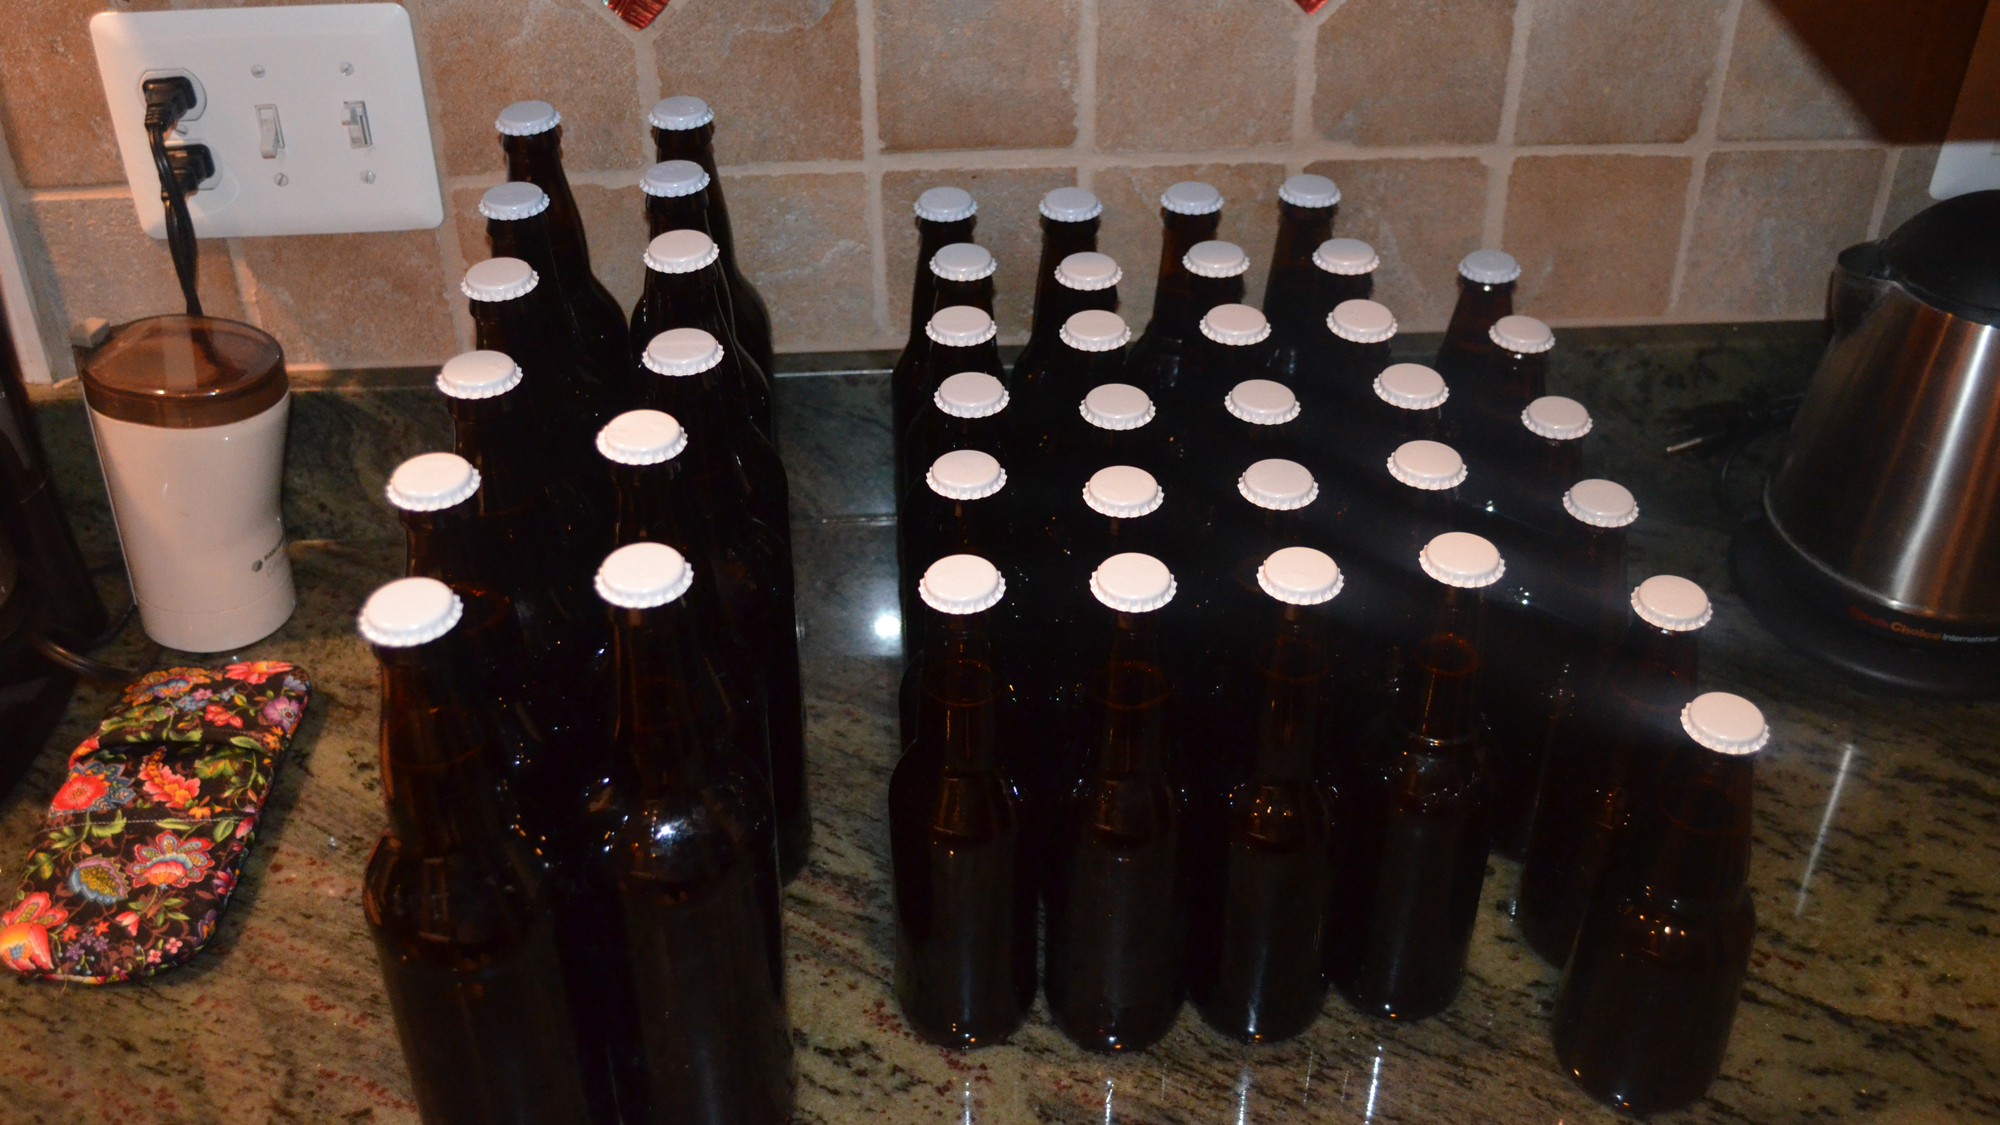 @ Home brew bottles